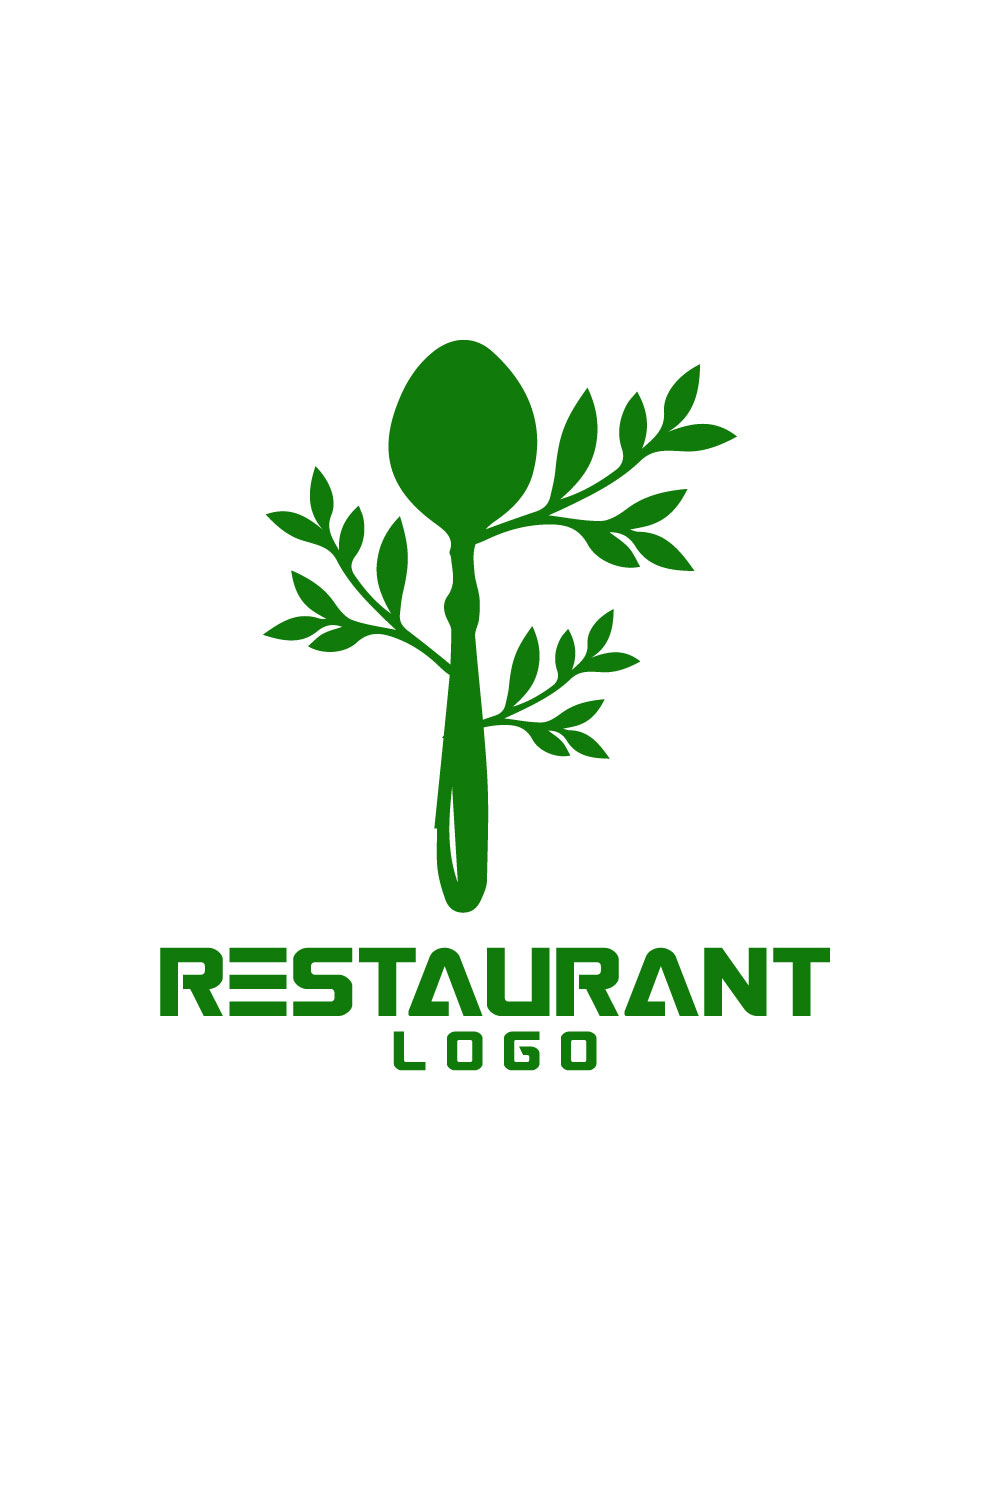 Free Green Restaurant Logo pinterest preview image.